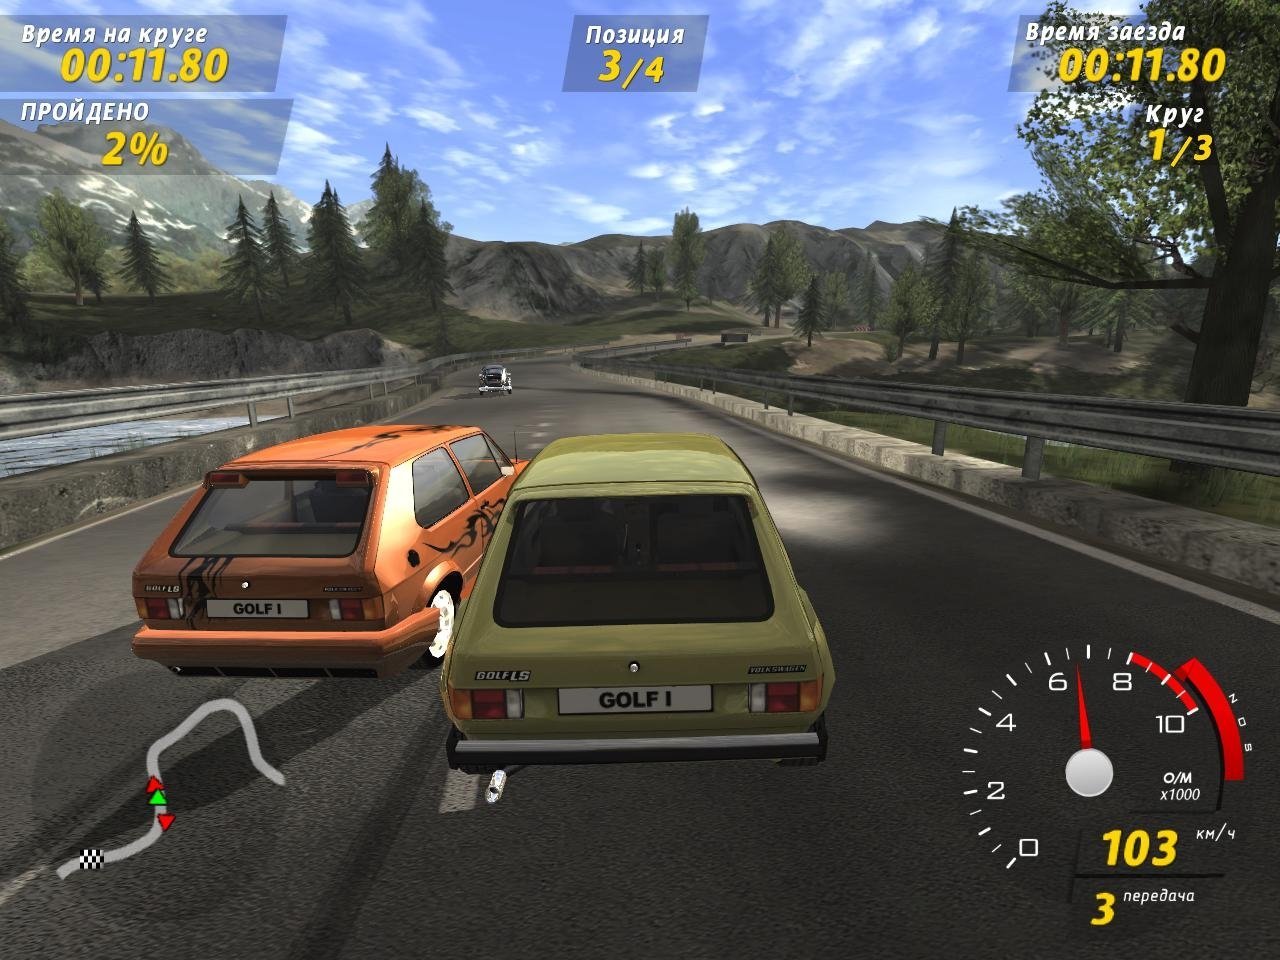 Игра гонки катаемся на машинах. Игра Volkswagen GTI Racing. GTI Racing Volkswagen Golf Racer. GTI Racing игра 2006. Русские гонки.